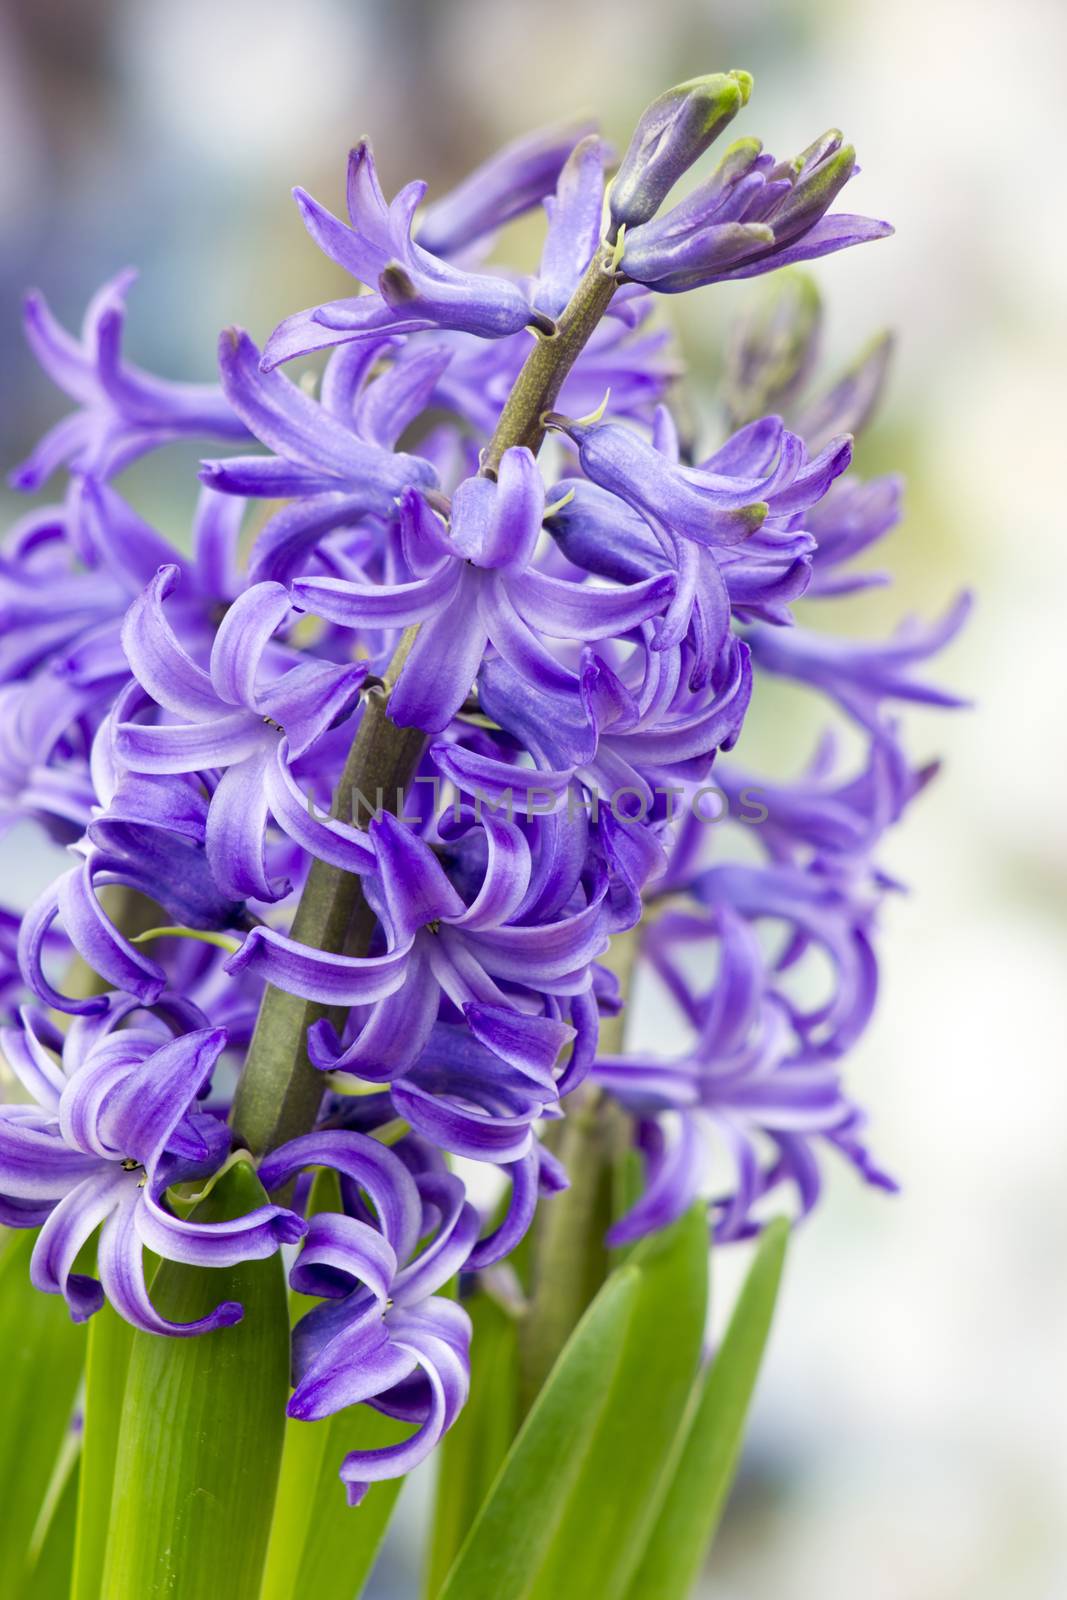 blooming hyacinth flowers (hyacinthus) by miradrozdowski